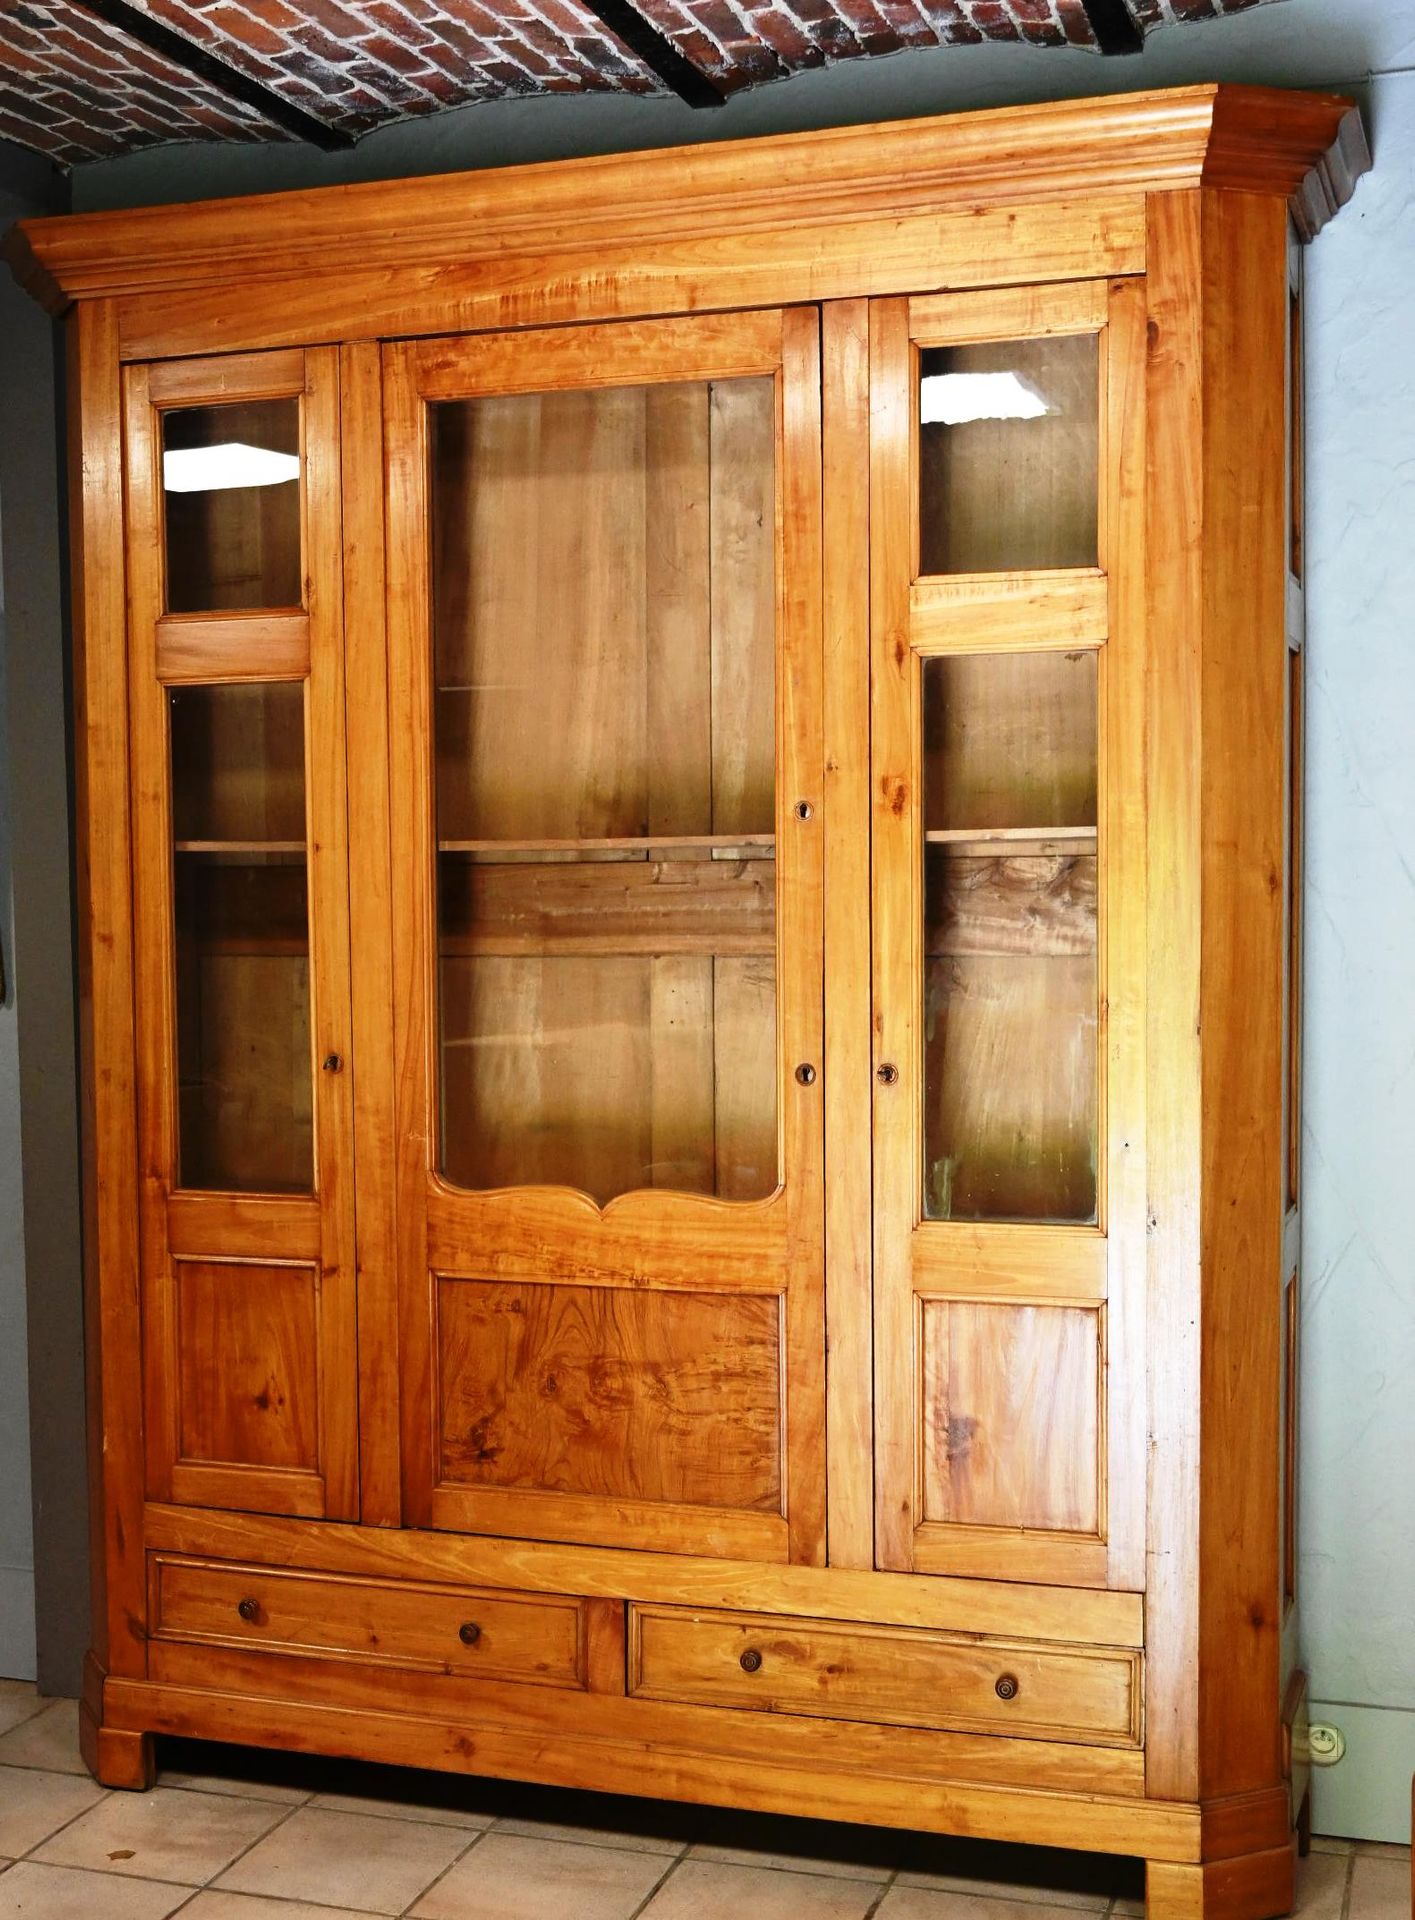 Grande bibliothèque en bois clair 大型浅色木质书柜，有三个玻璃门。

尺寸：260厘米 x 220厘米 x 50厘米